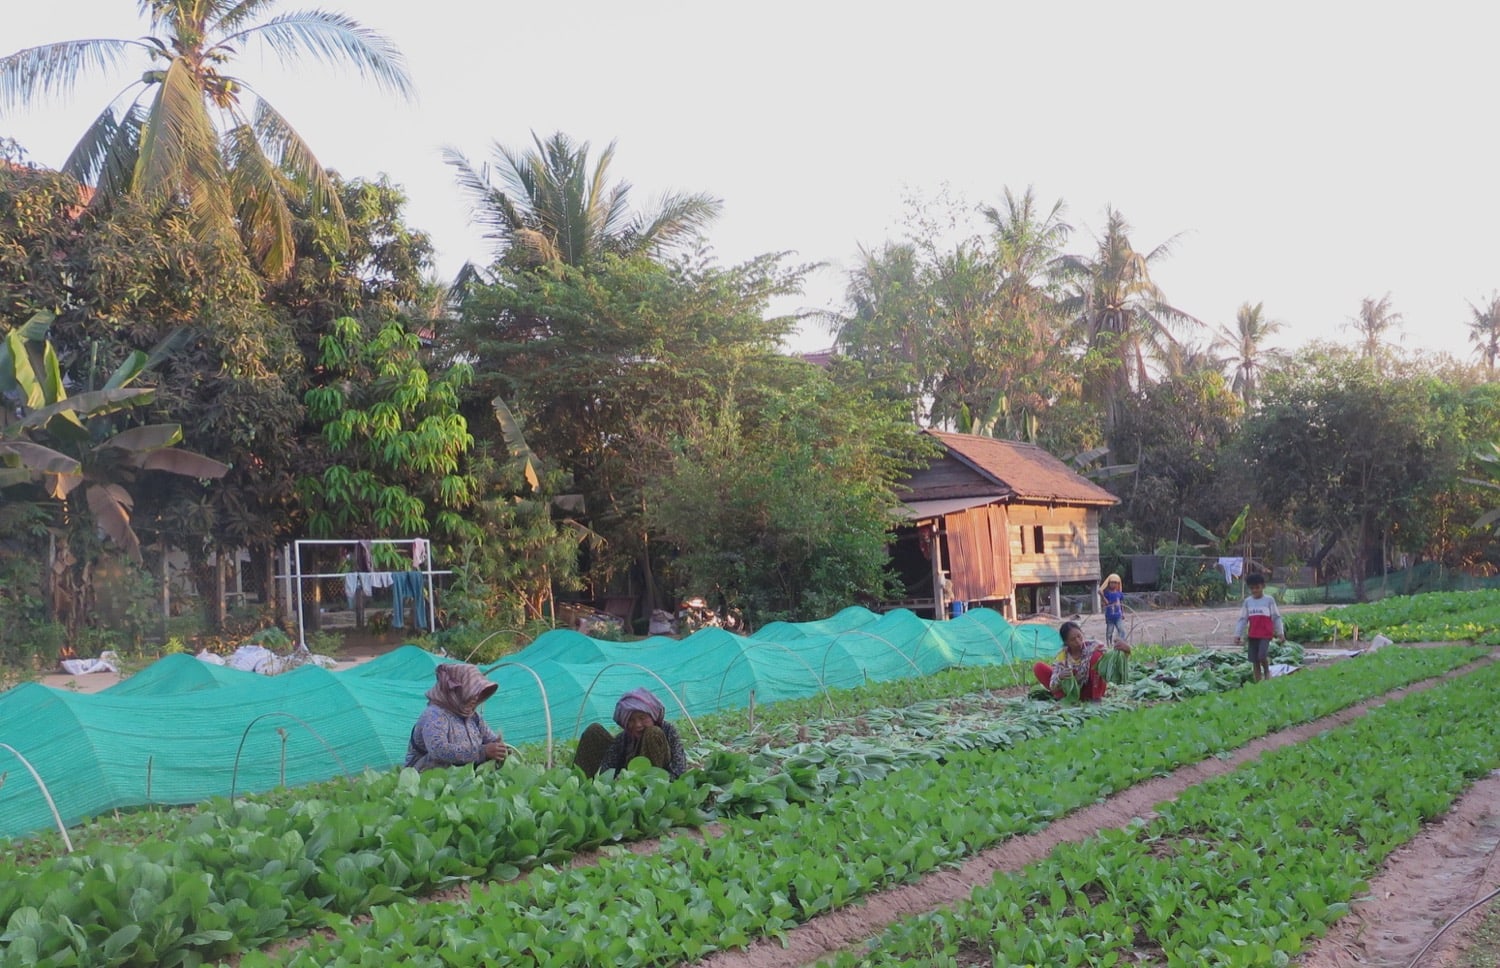 agricolture permaculture cambodia naturebels